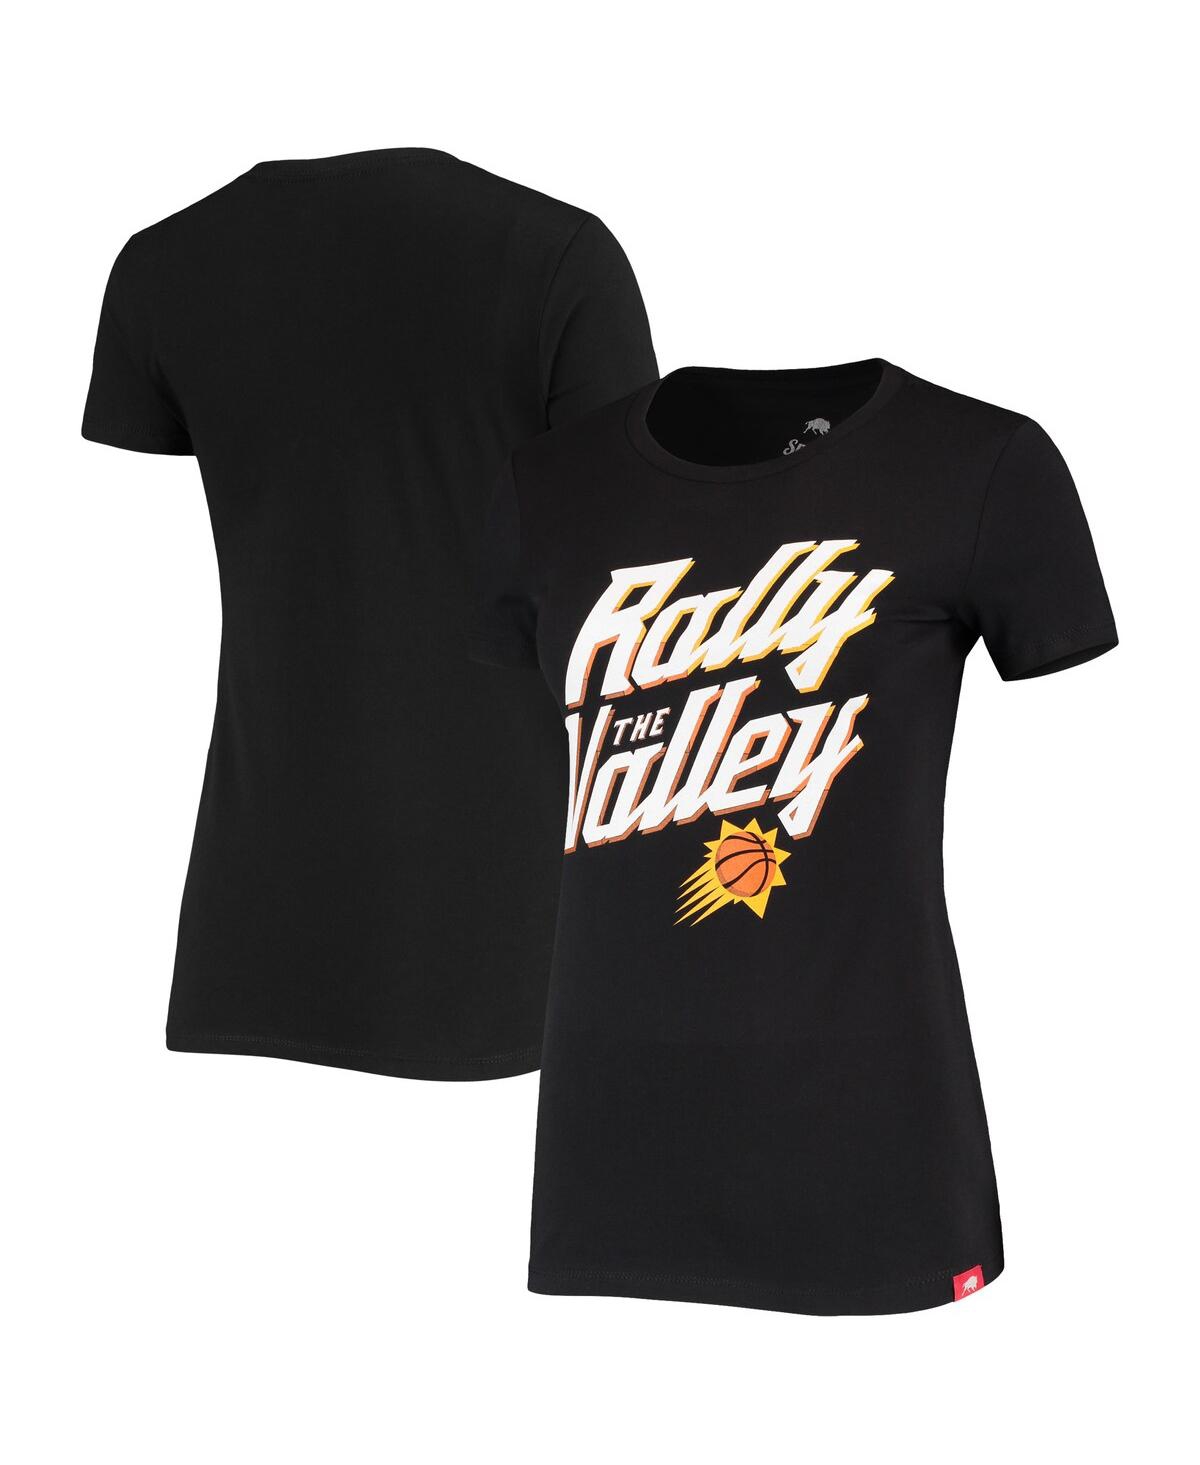 Shop Sportiqe Women's  Heathered Black Phoenix Suns Rally The Valley Davis T-shirt